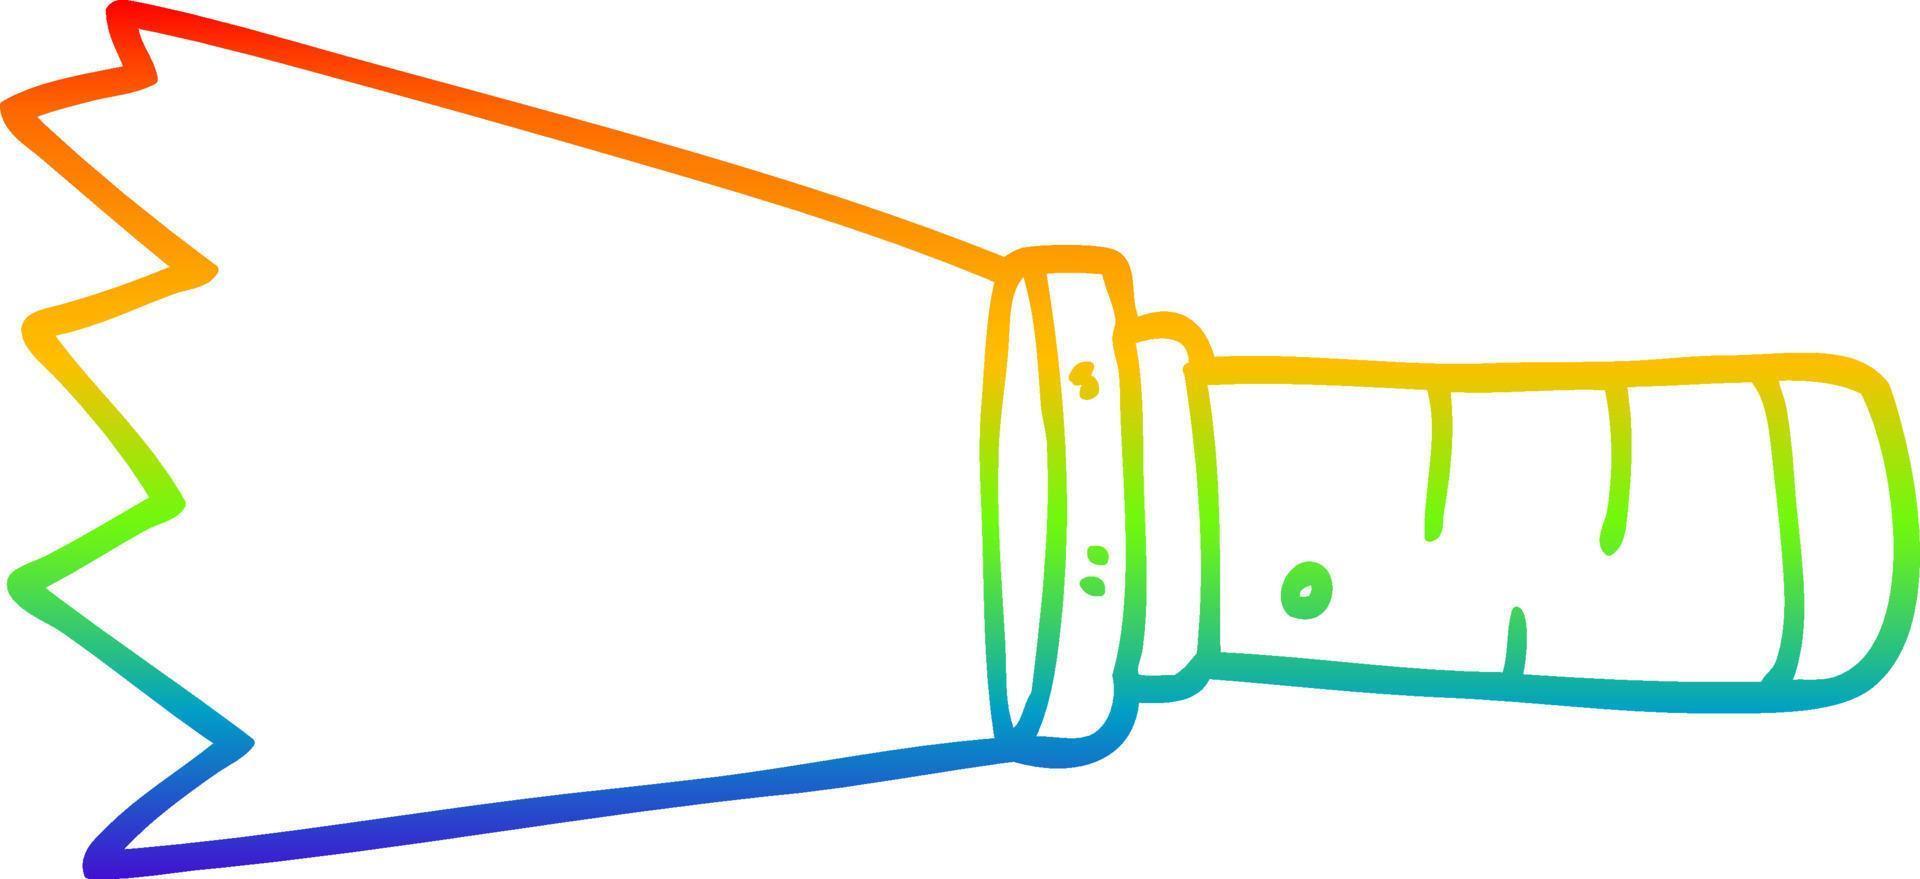 rainbow gradient line drawing cartoon lit torch vector